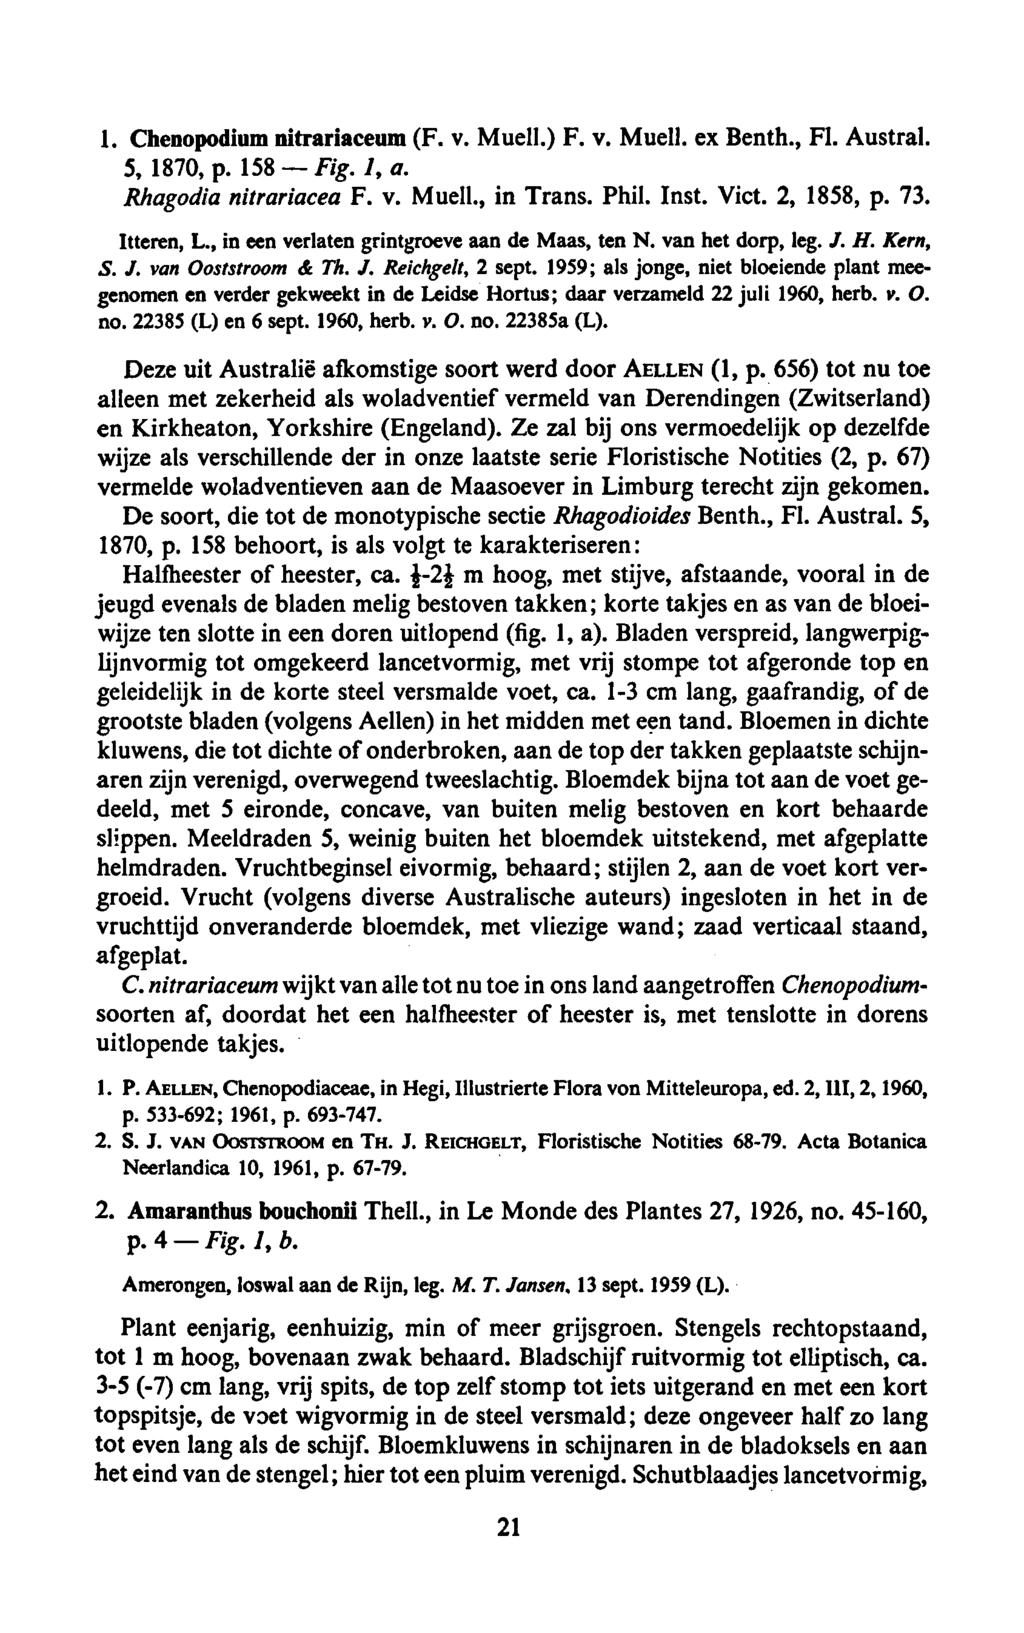 . 1. Chenopodium nitrariaceum (F. v. Muell.) F. Muell. v. ex Benth., Fl. Austral. 5, 158 1870, p. Fig. 1, a. Rhagodia nitrariacea F. v. Muell., in Trans. Phil. Inst. Vict. 2, 1858, p. 73. Itteren, L.